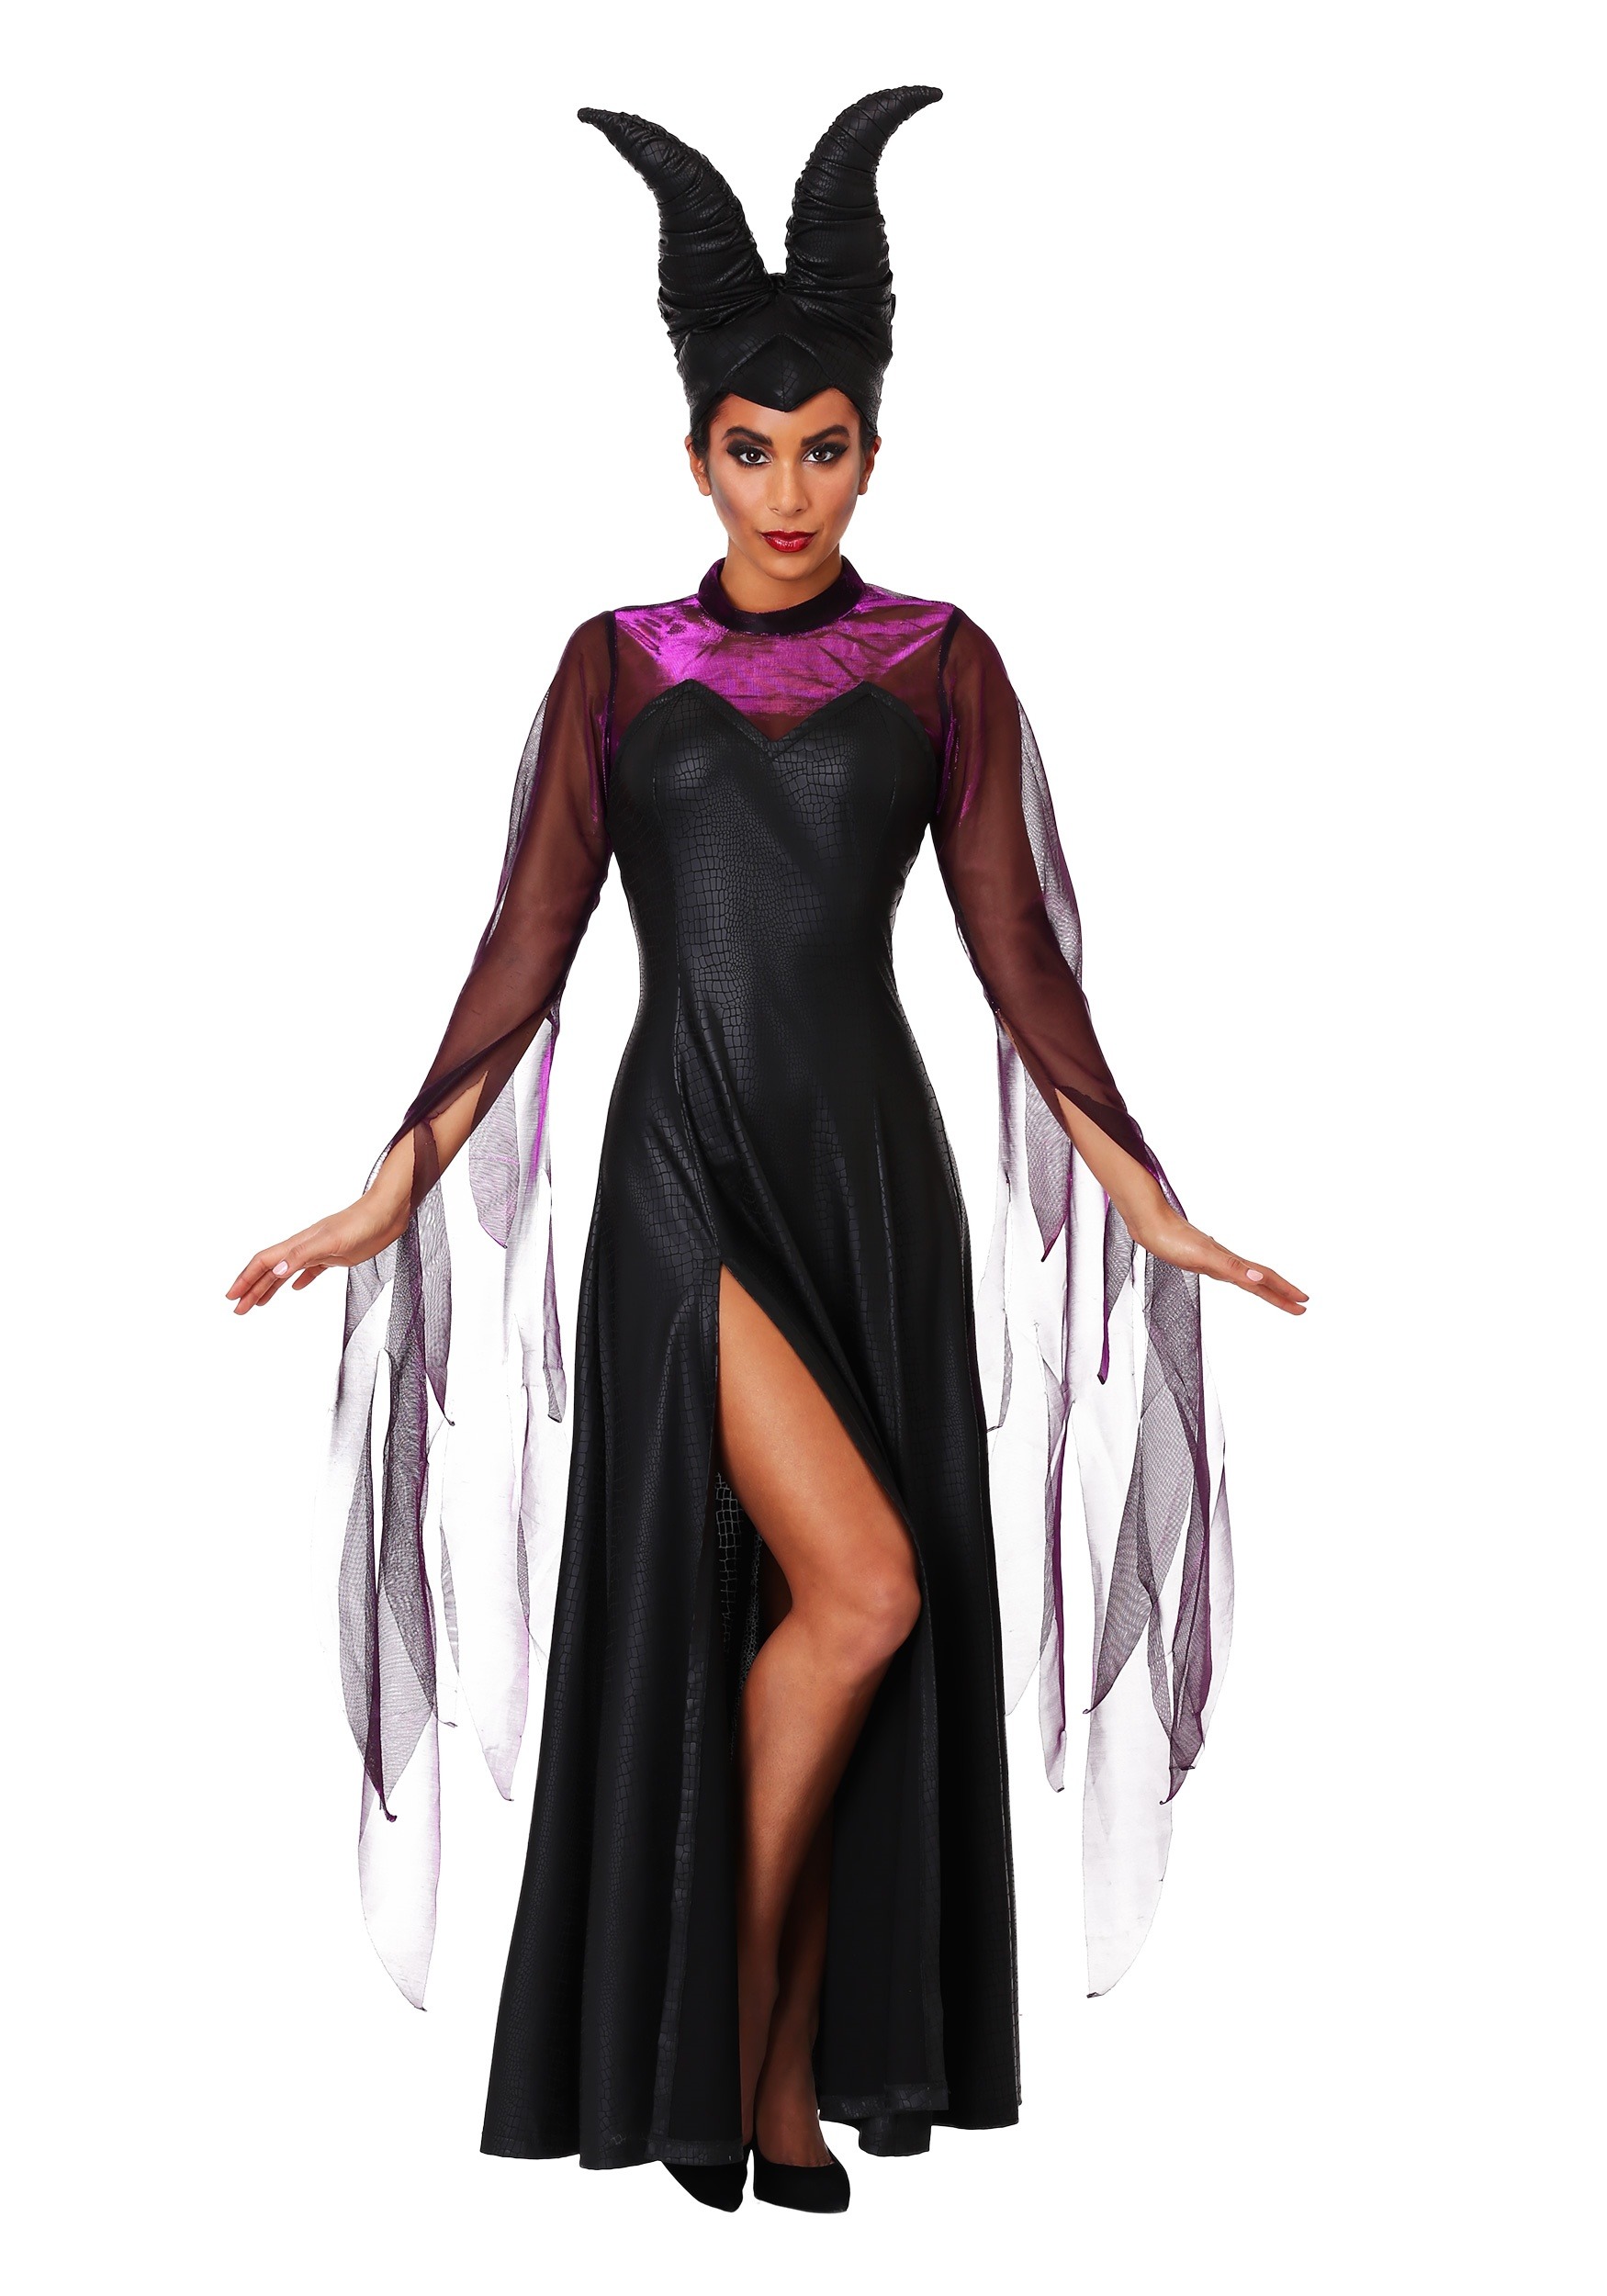 Photos - Fancy Dress FUN Costumes Women's Malicious Queen Plus Size Costume Black/Purple FU